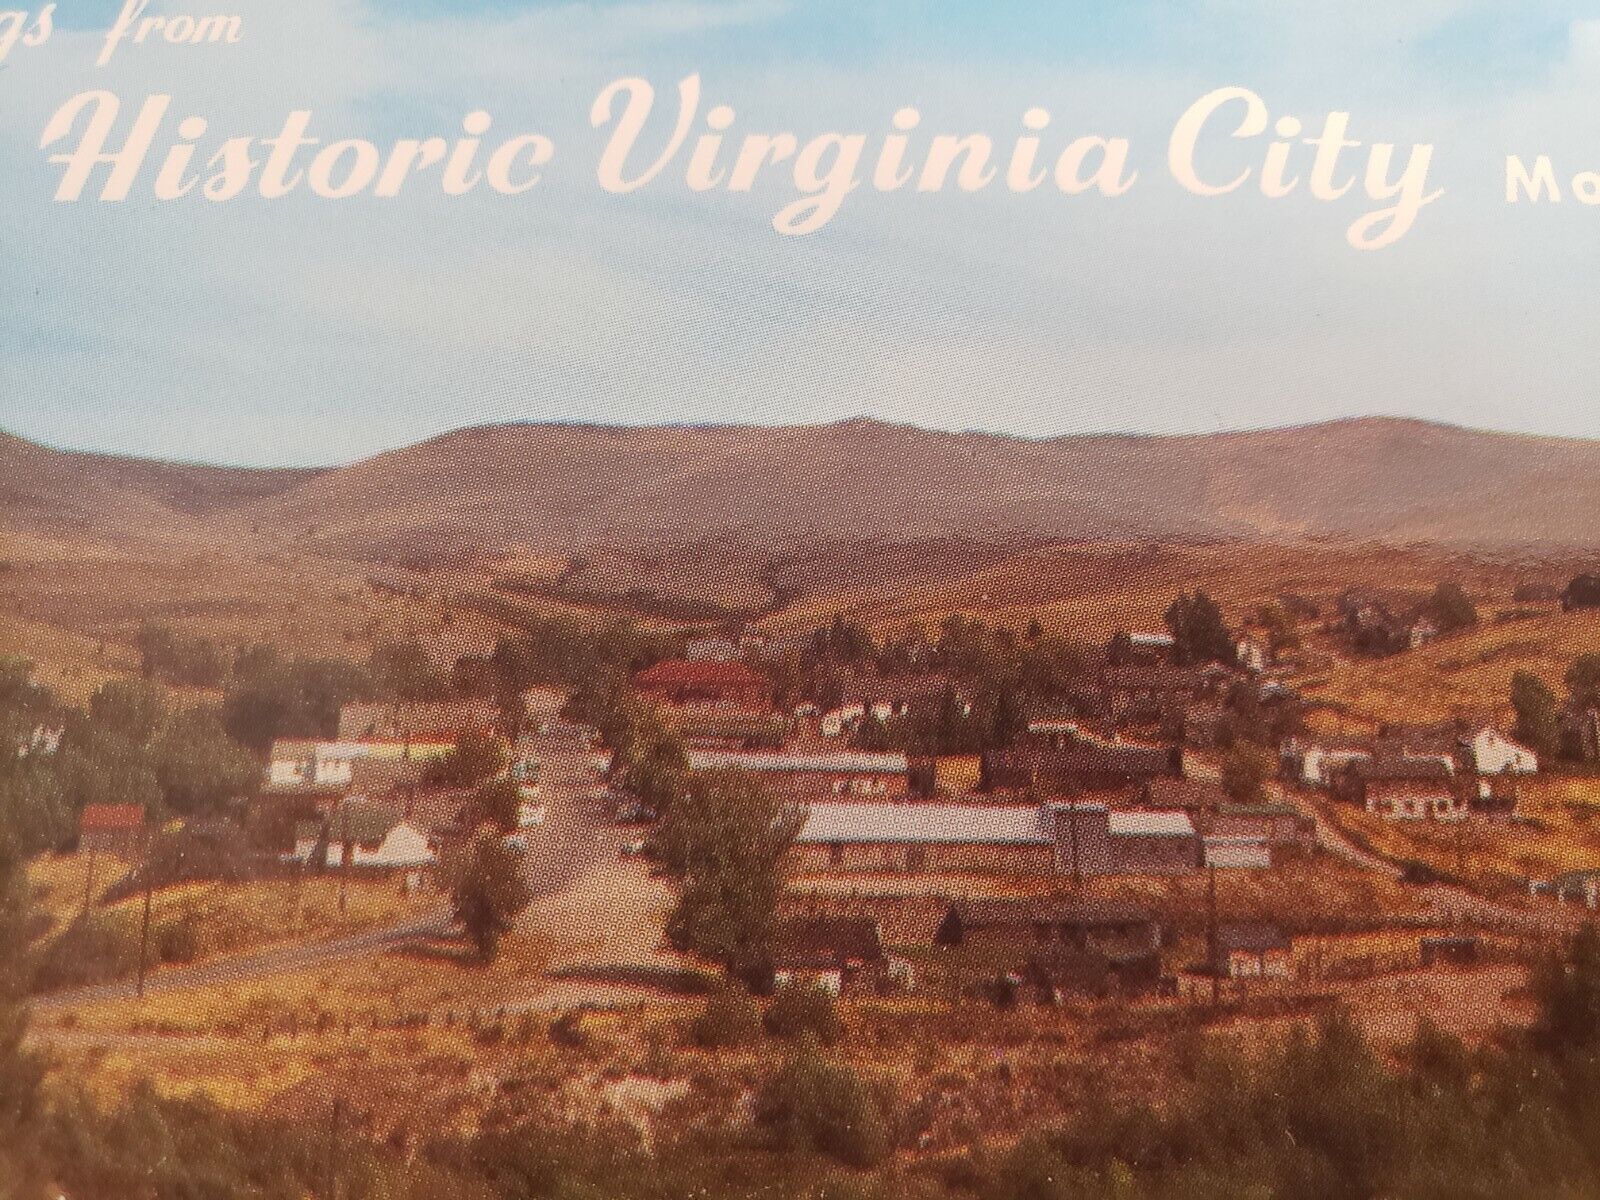 C 1960s Greetings From Historic Virginia City Montana Chrome Vintage Postcard